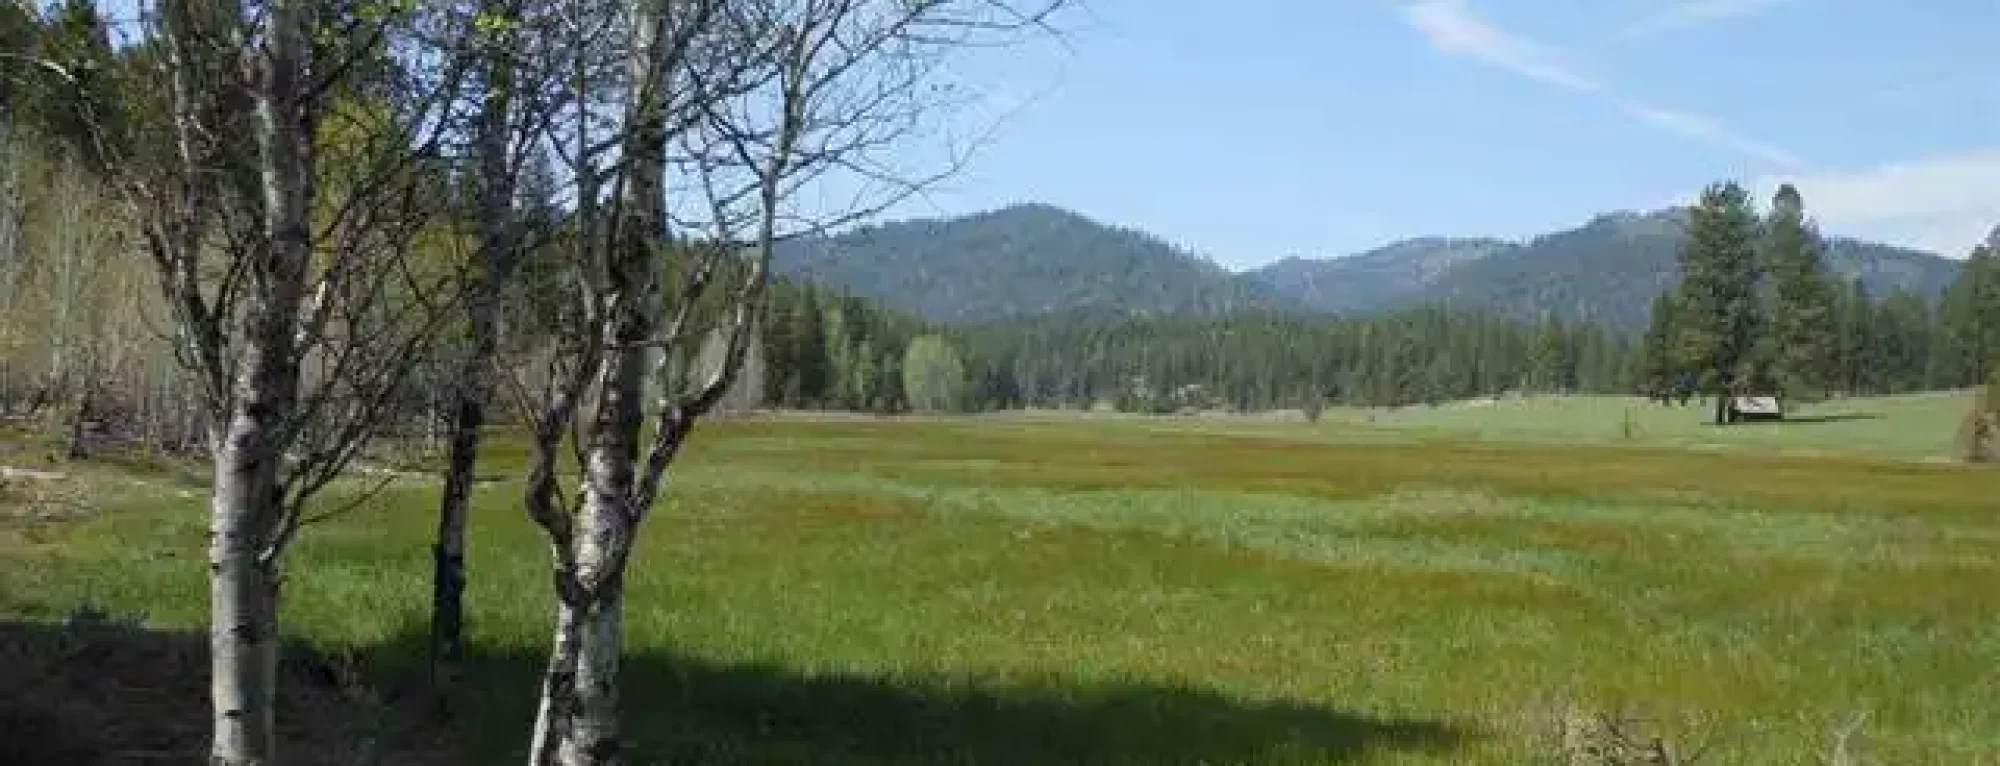 trail-creek-meadow-ranch-for-sale-3